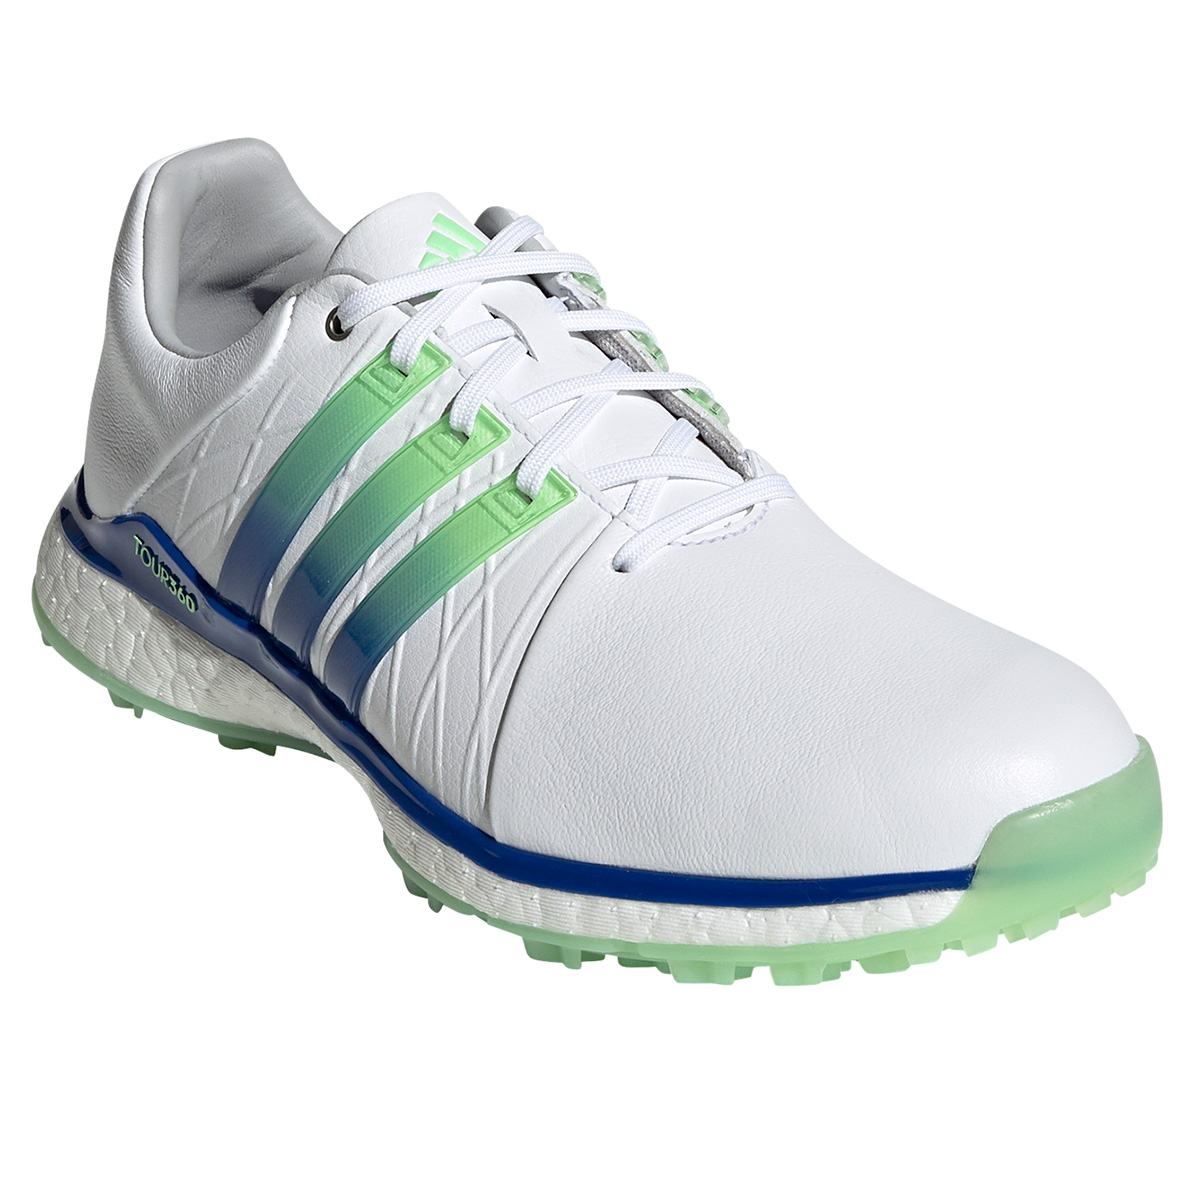 adidas golf shoes tour 360 xt sl